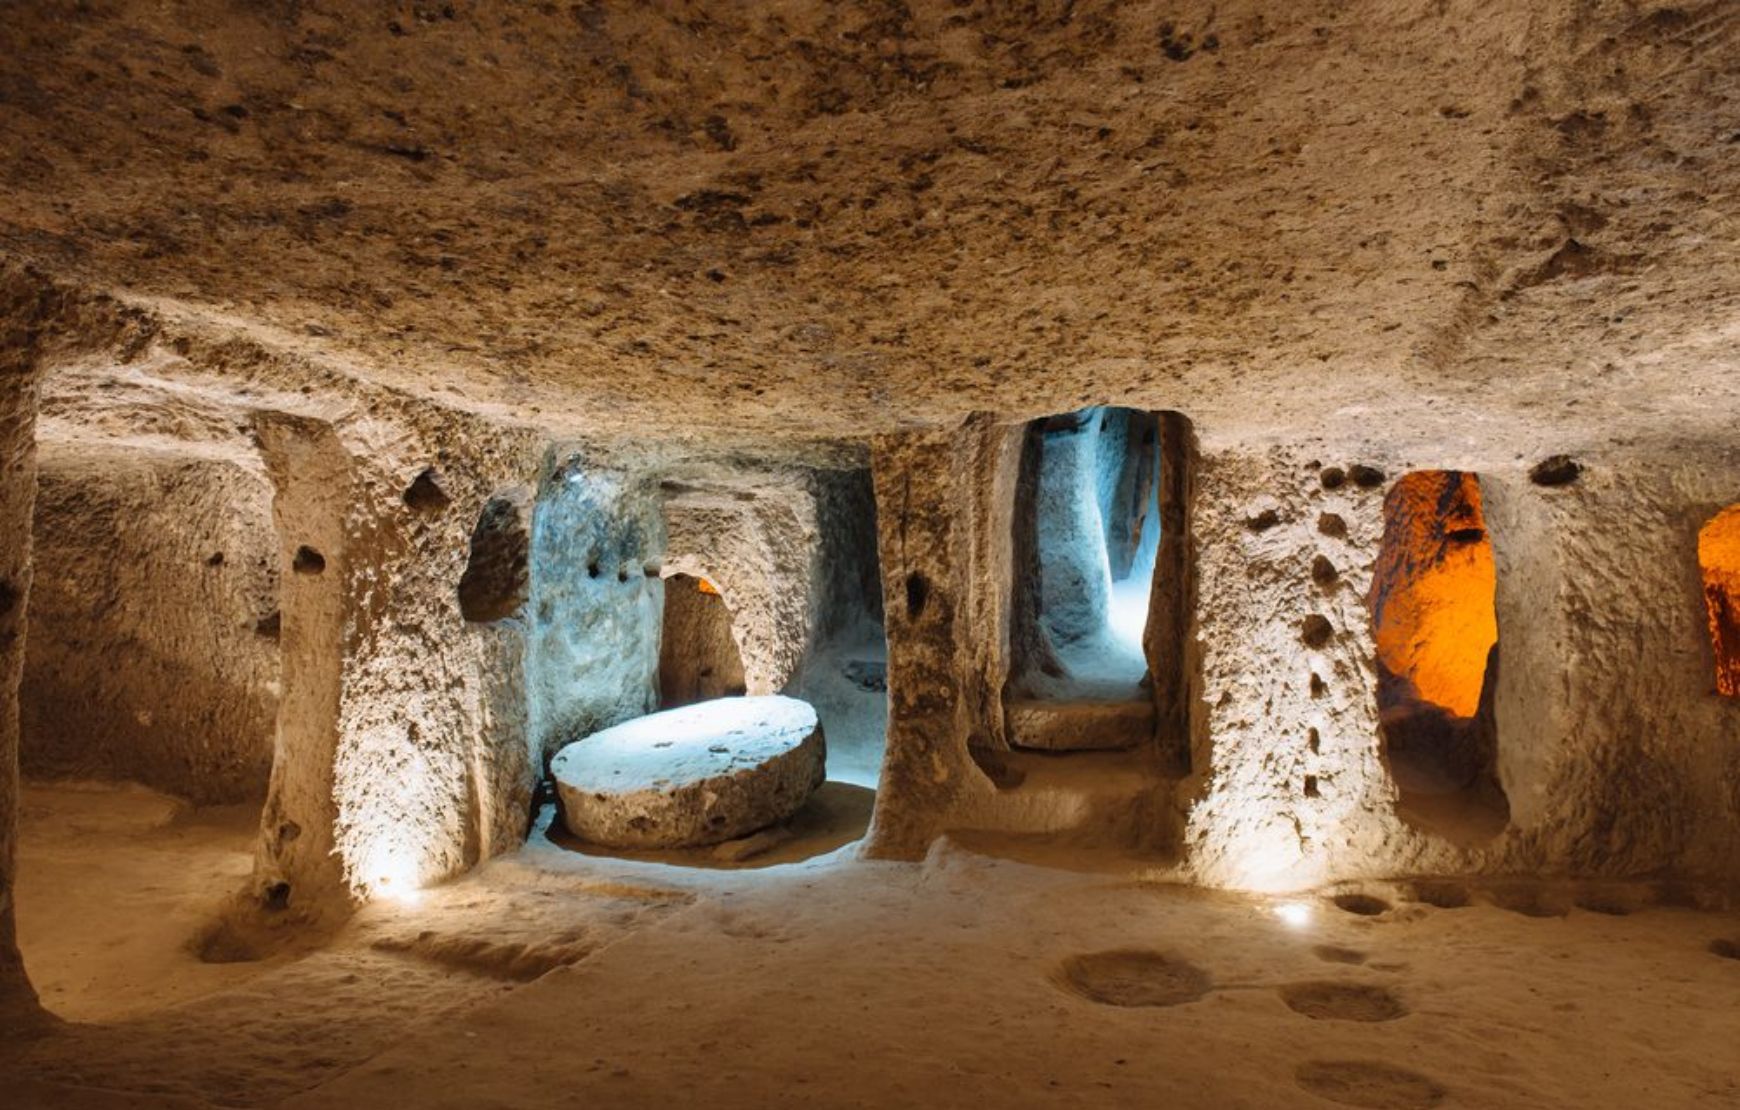 kaymakli underground city in Cappadocia